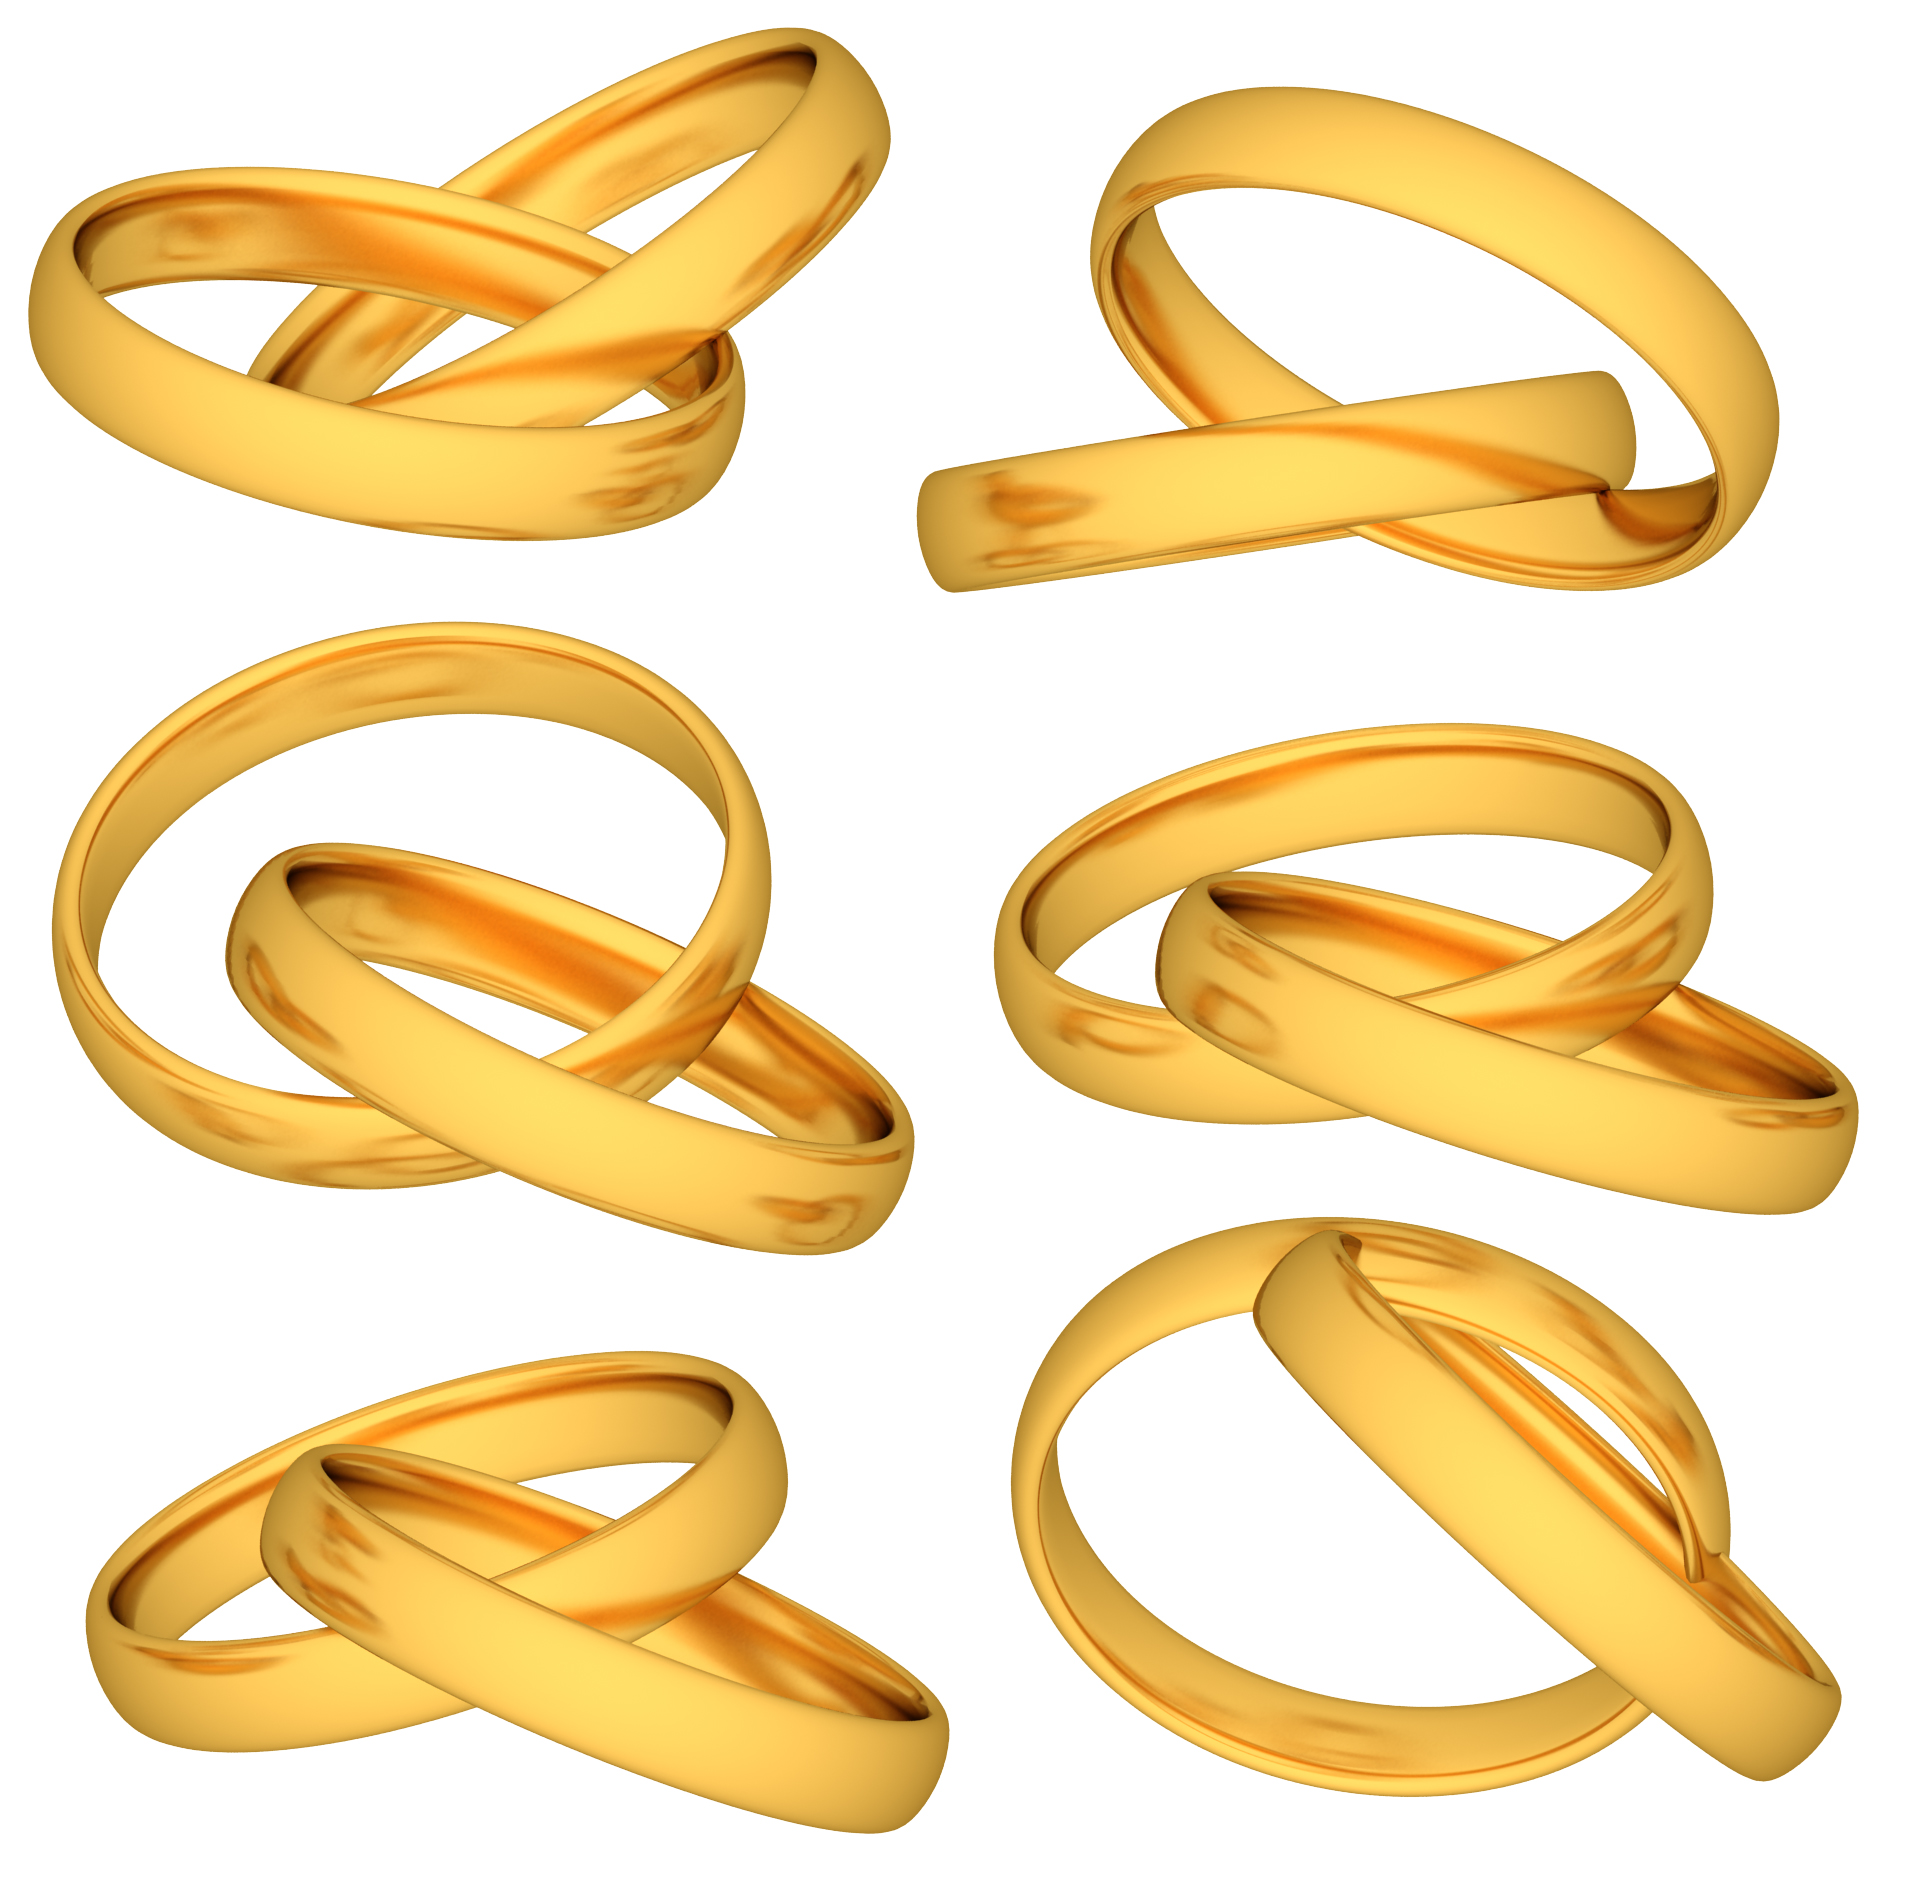 14 Photoshop PSD Wedding Ring Images